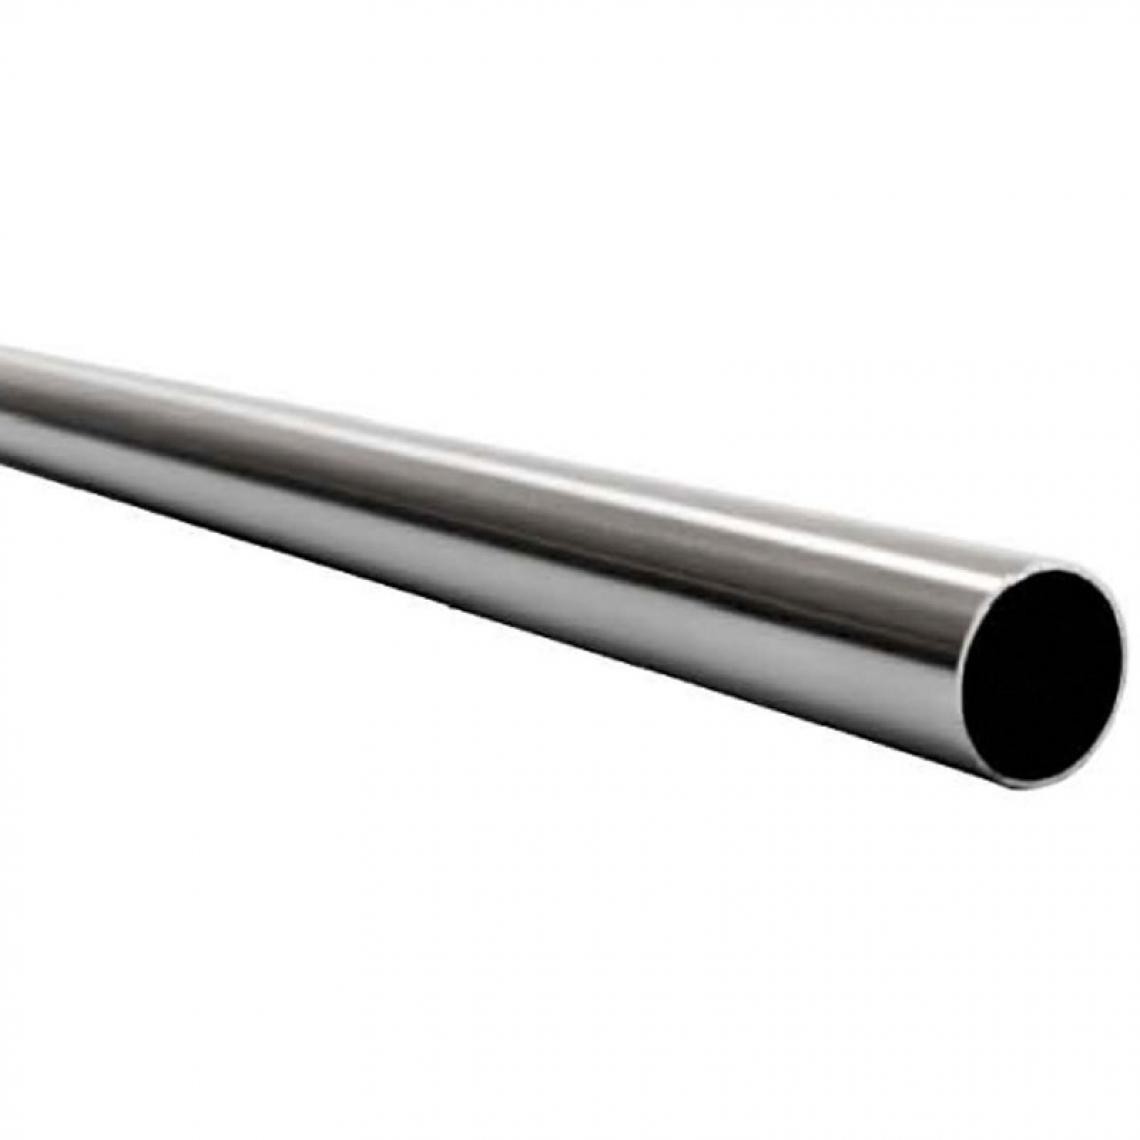 Adler - Tube inox ∅19 - Décor : Poli - Matériau : Inox - Longueur : 1600 mm - Diamètre : 19 mm - ADLER - Tuyau de cuivre et raccords